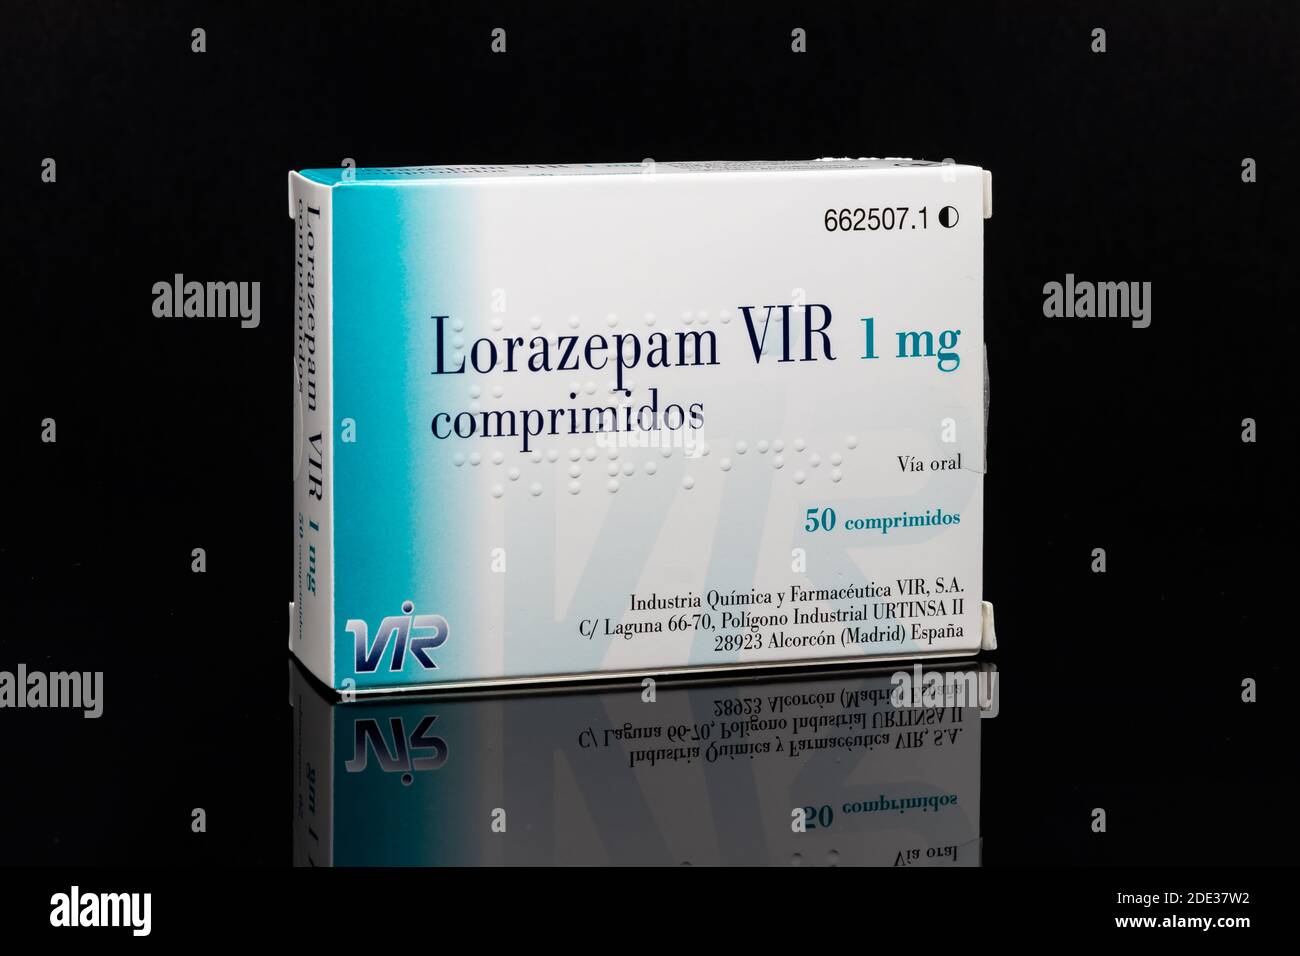 Huelva, Spain - November 26, 2020: Spanish Box of Lorazepam brand VIR. It is used to treat anxiety disorders, trouble sleeping, active seizures. Stock Photo